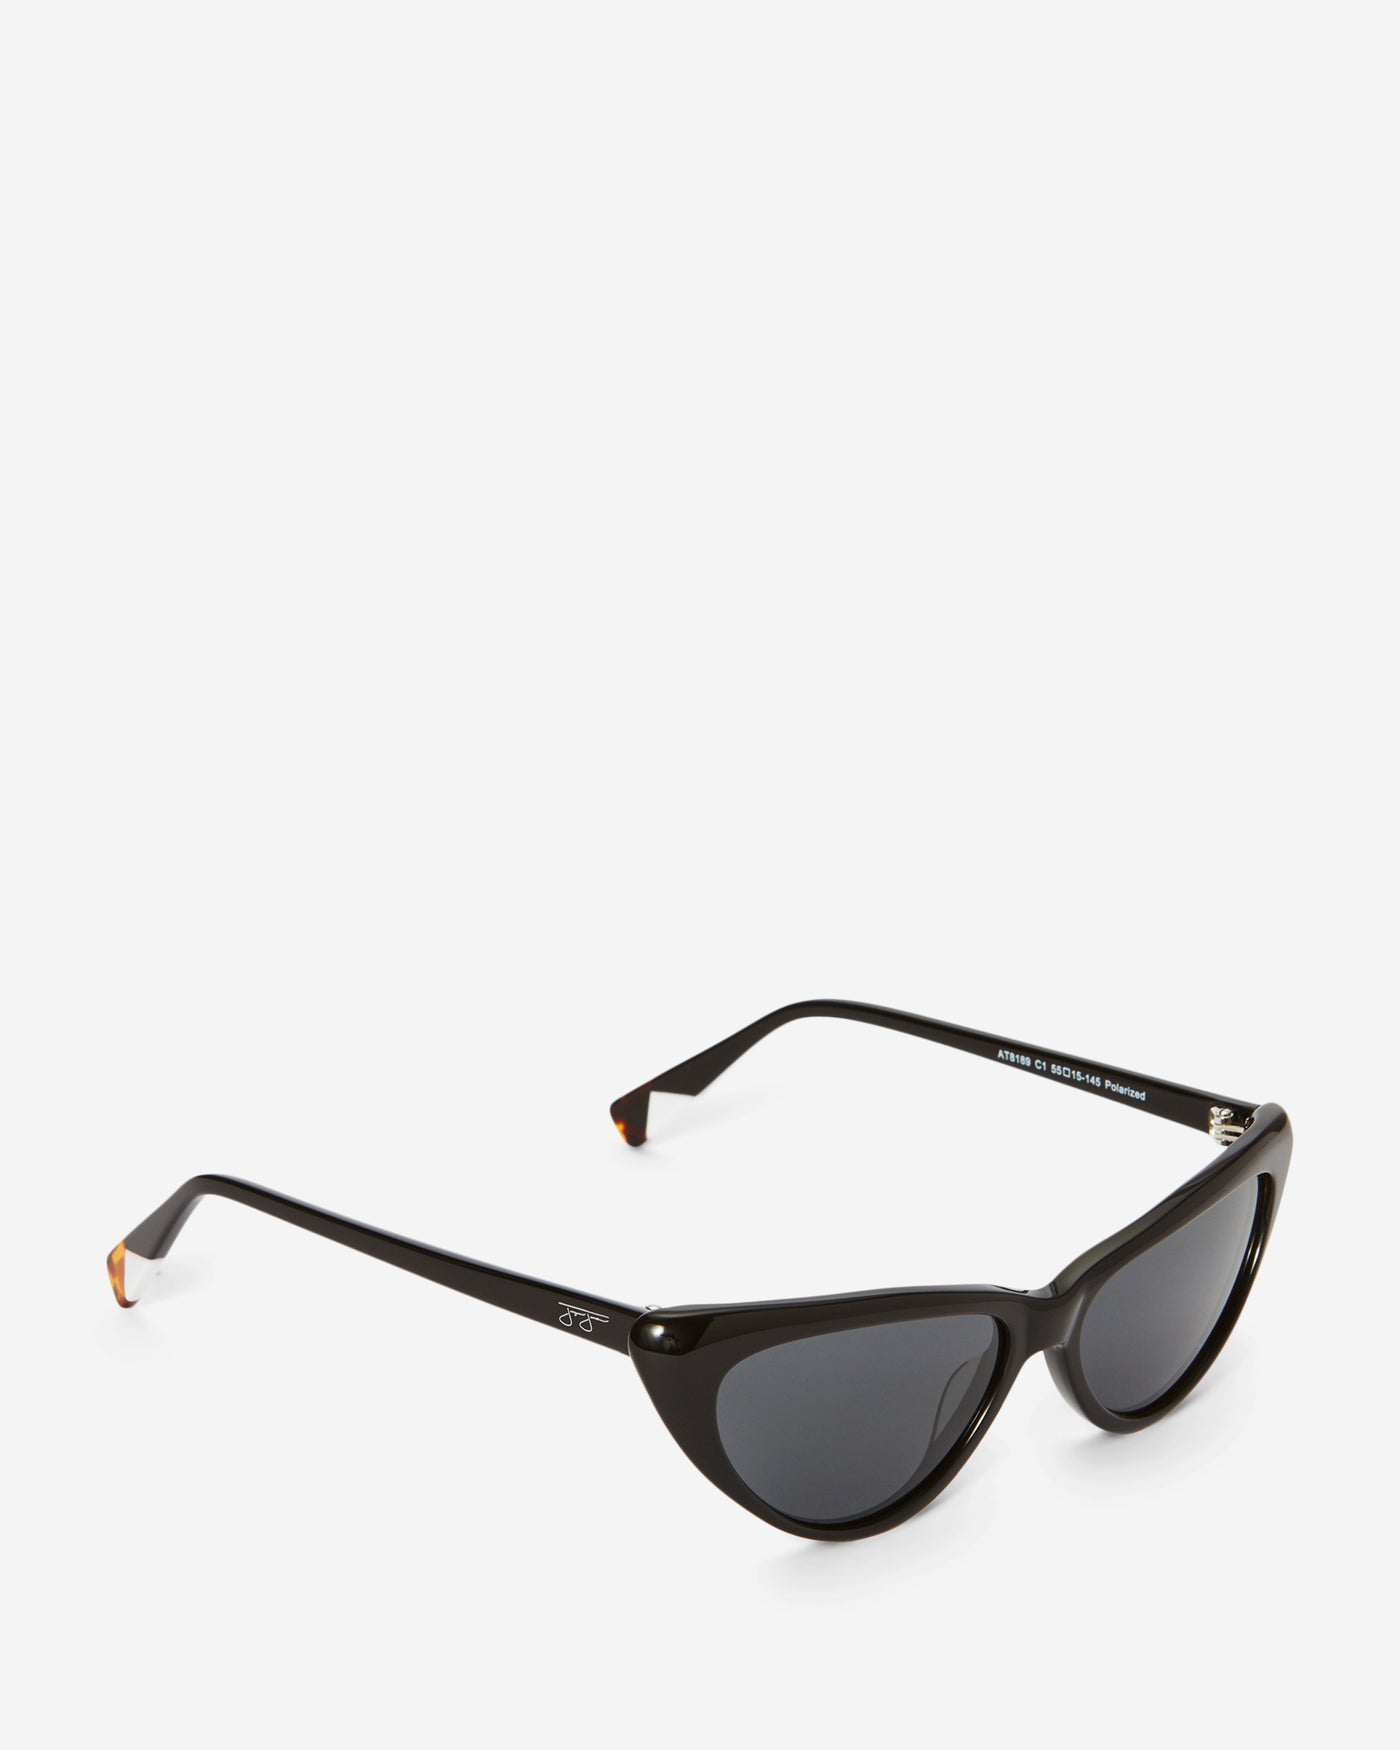 Retro Mini Cat Eye Sunglasses - Black Frame Sunglasses Joey James, The Label   